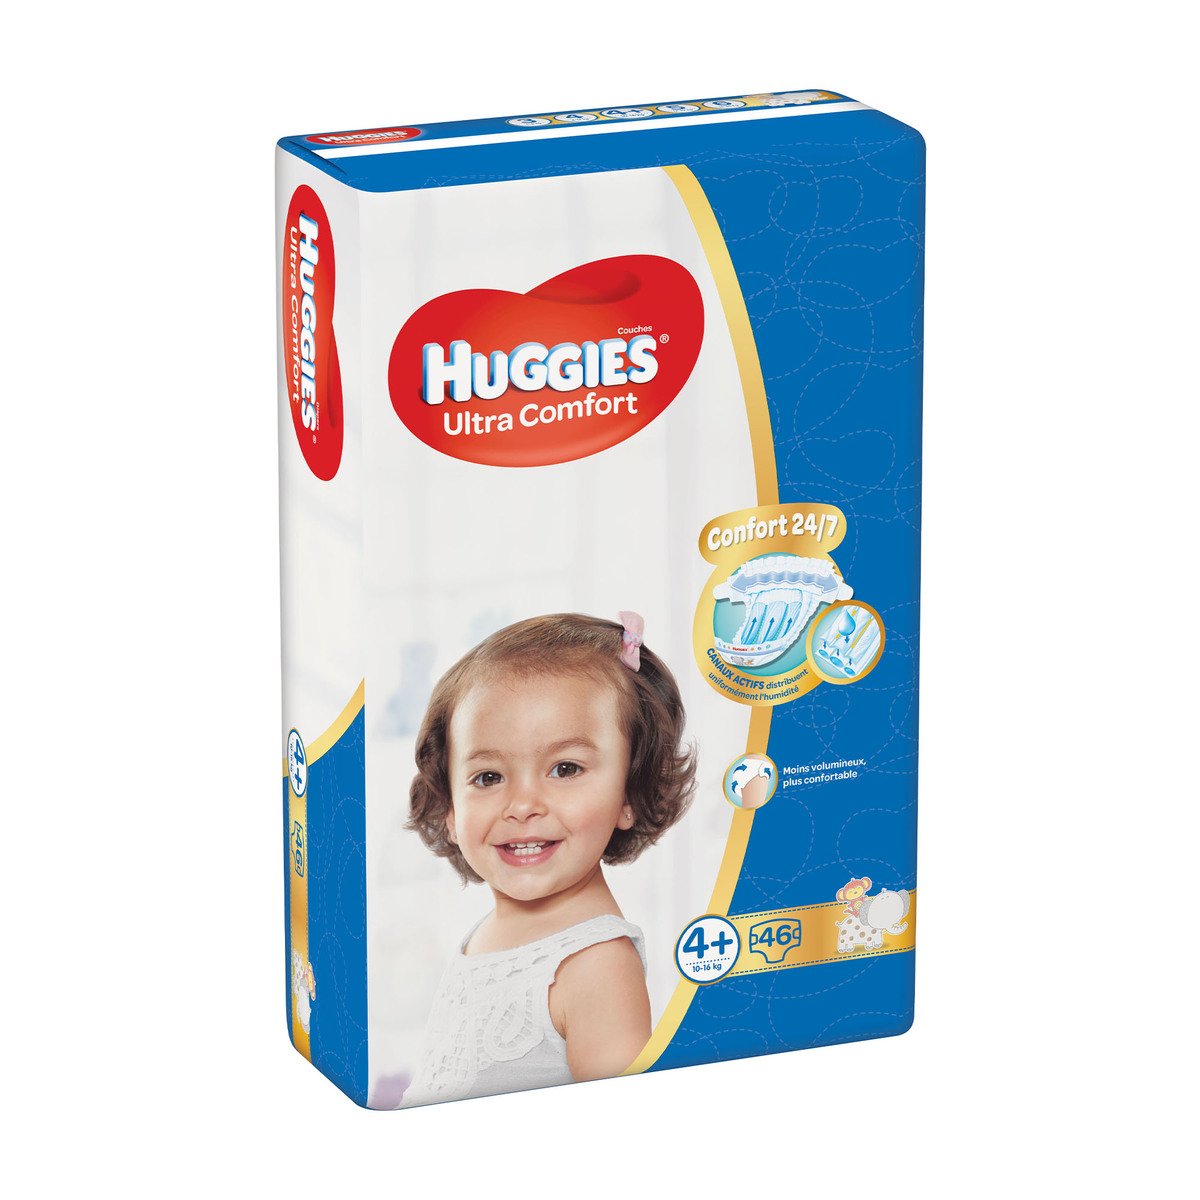 Huggies Ultra Comfort Diaper Size 4+, 10-16kg 46pcs